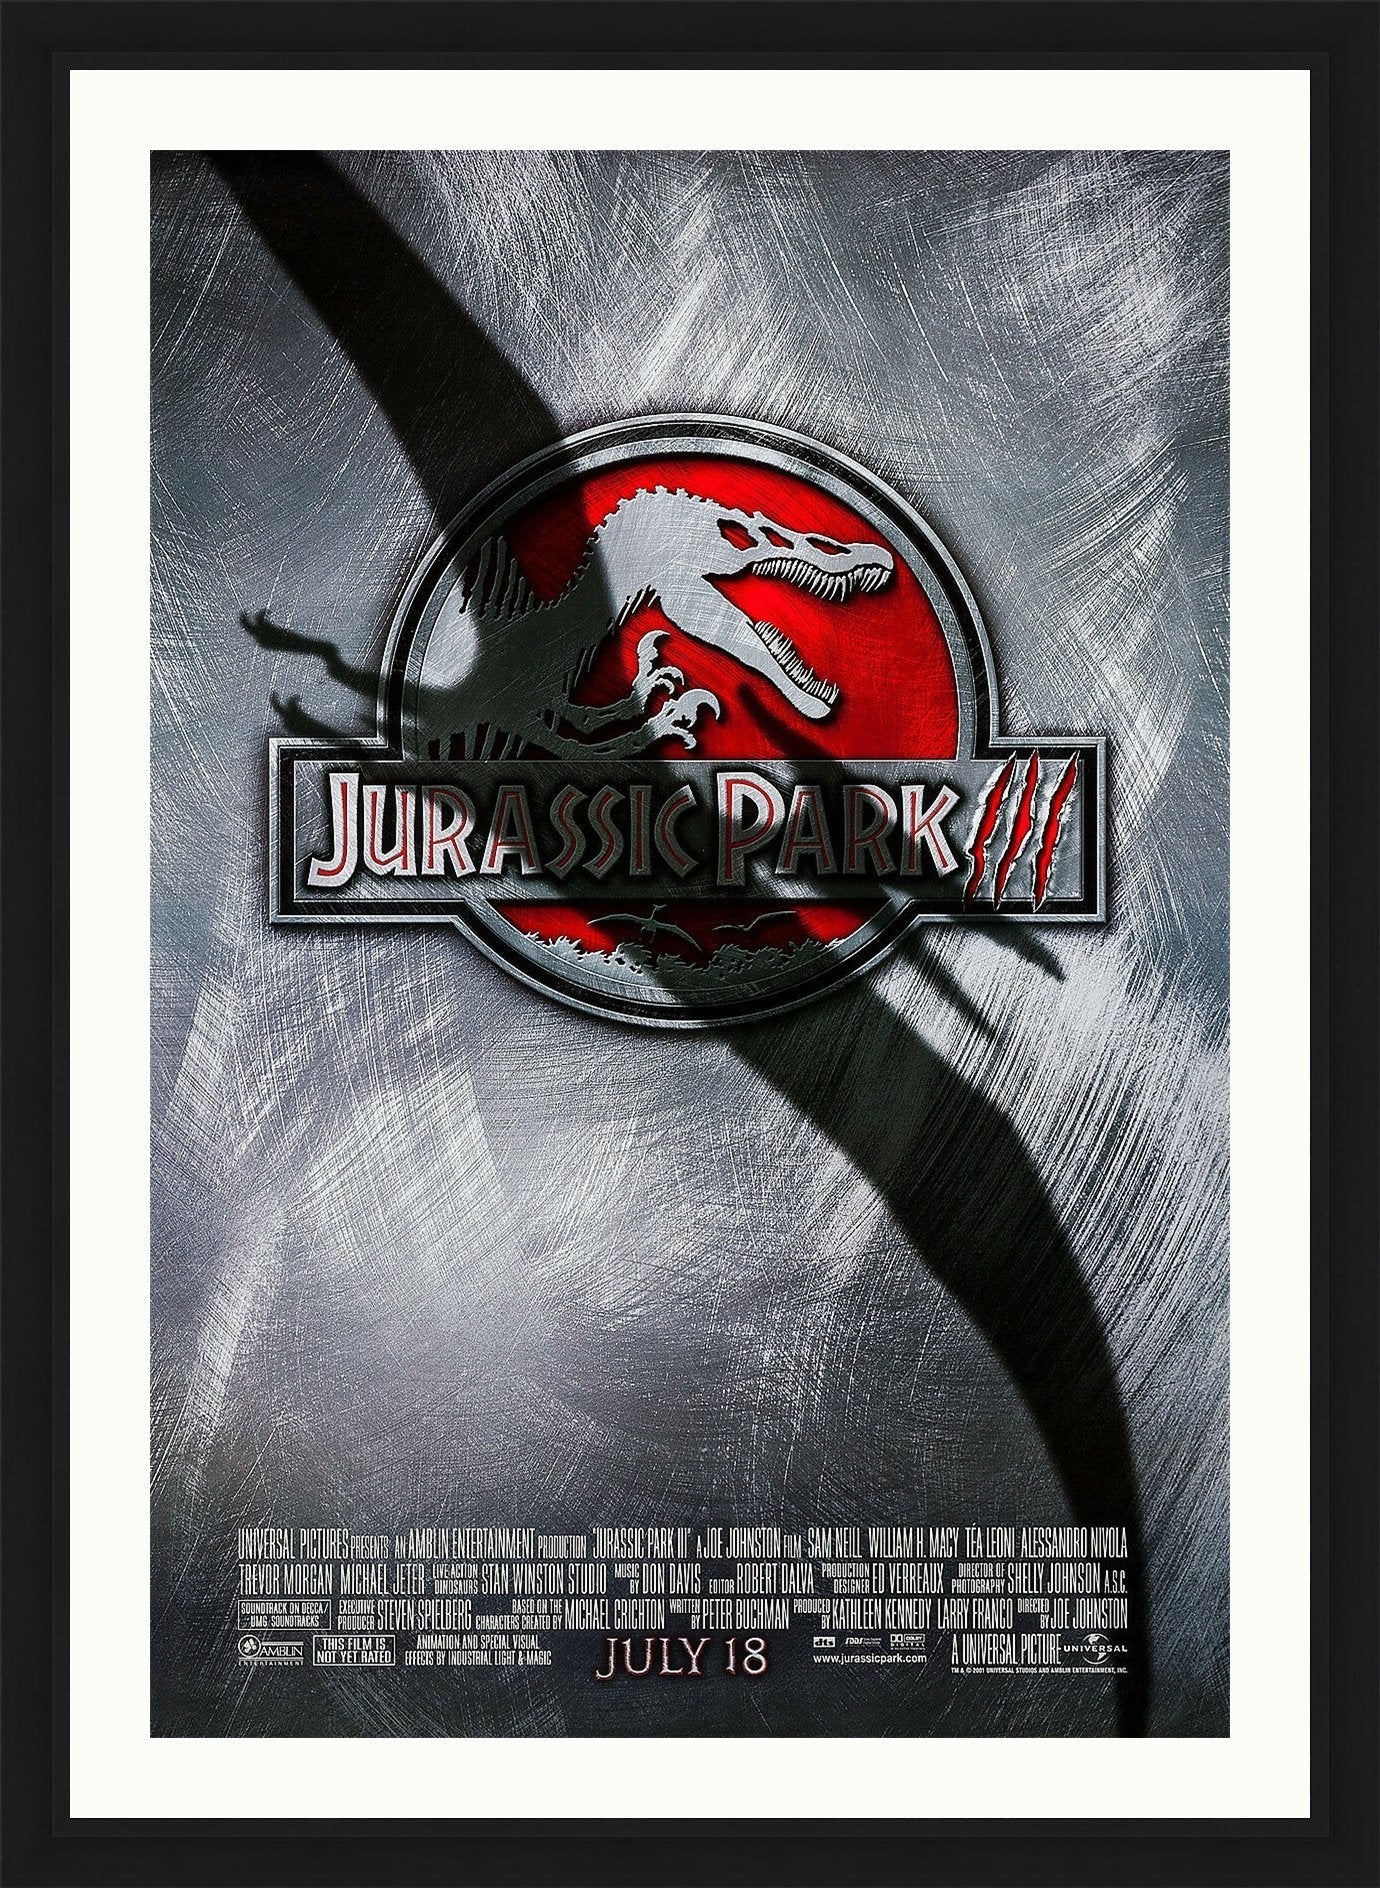 An original movie poster for the film Jurassic Park 3